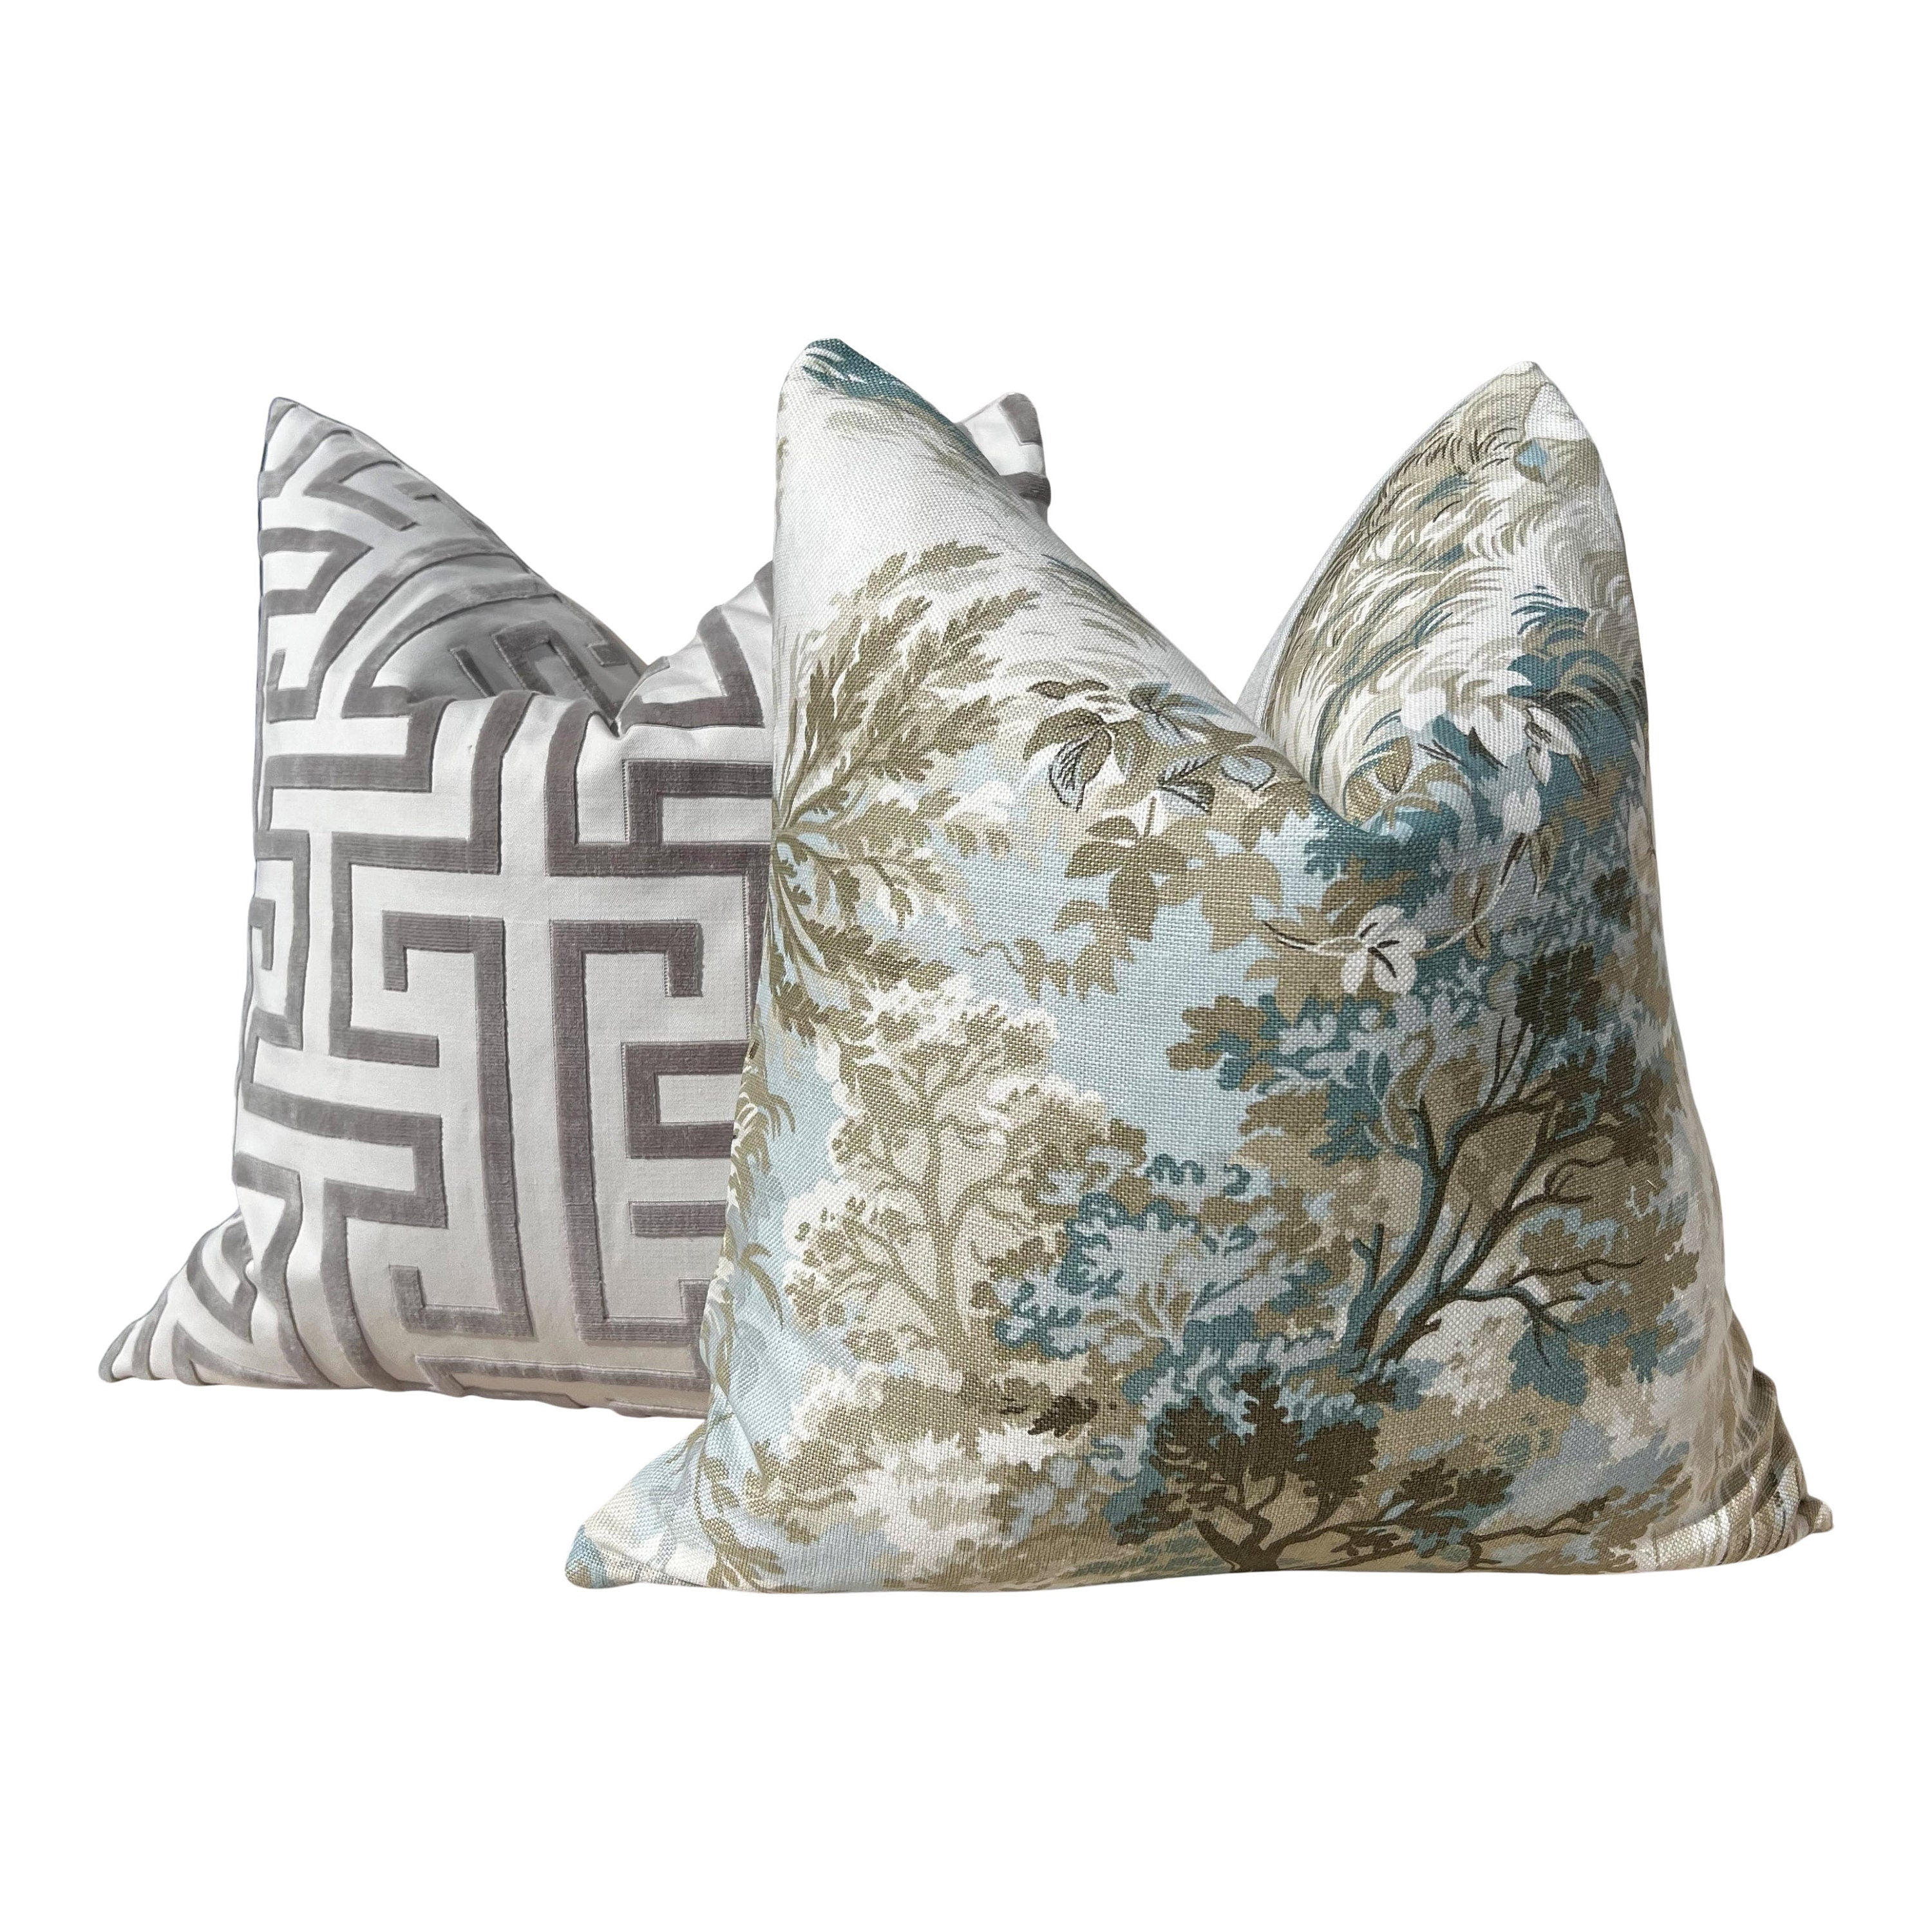 Lincoln Pillow in Beige and Spa Blue. Designer Pillows, High End Botanical Pillow Covers, Accent Aqua Blue Pillow Case, Euro Sham Pillow